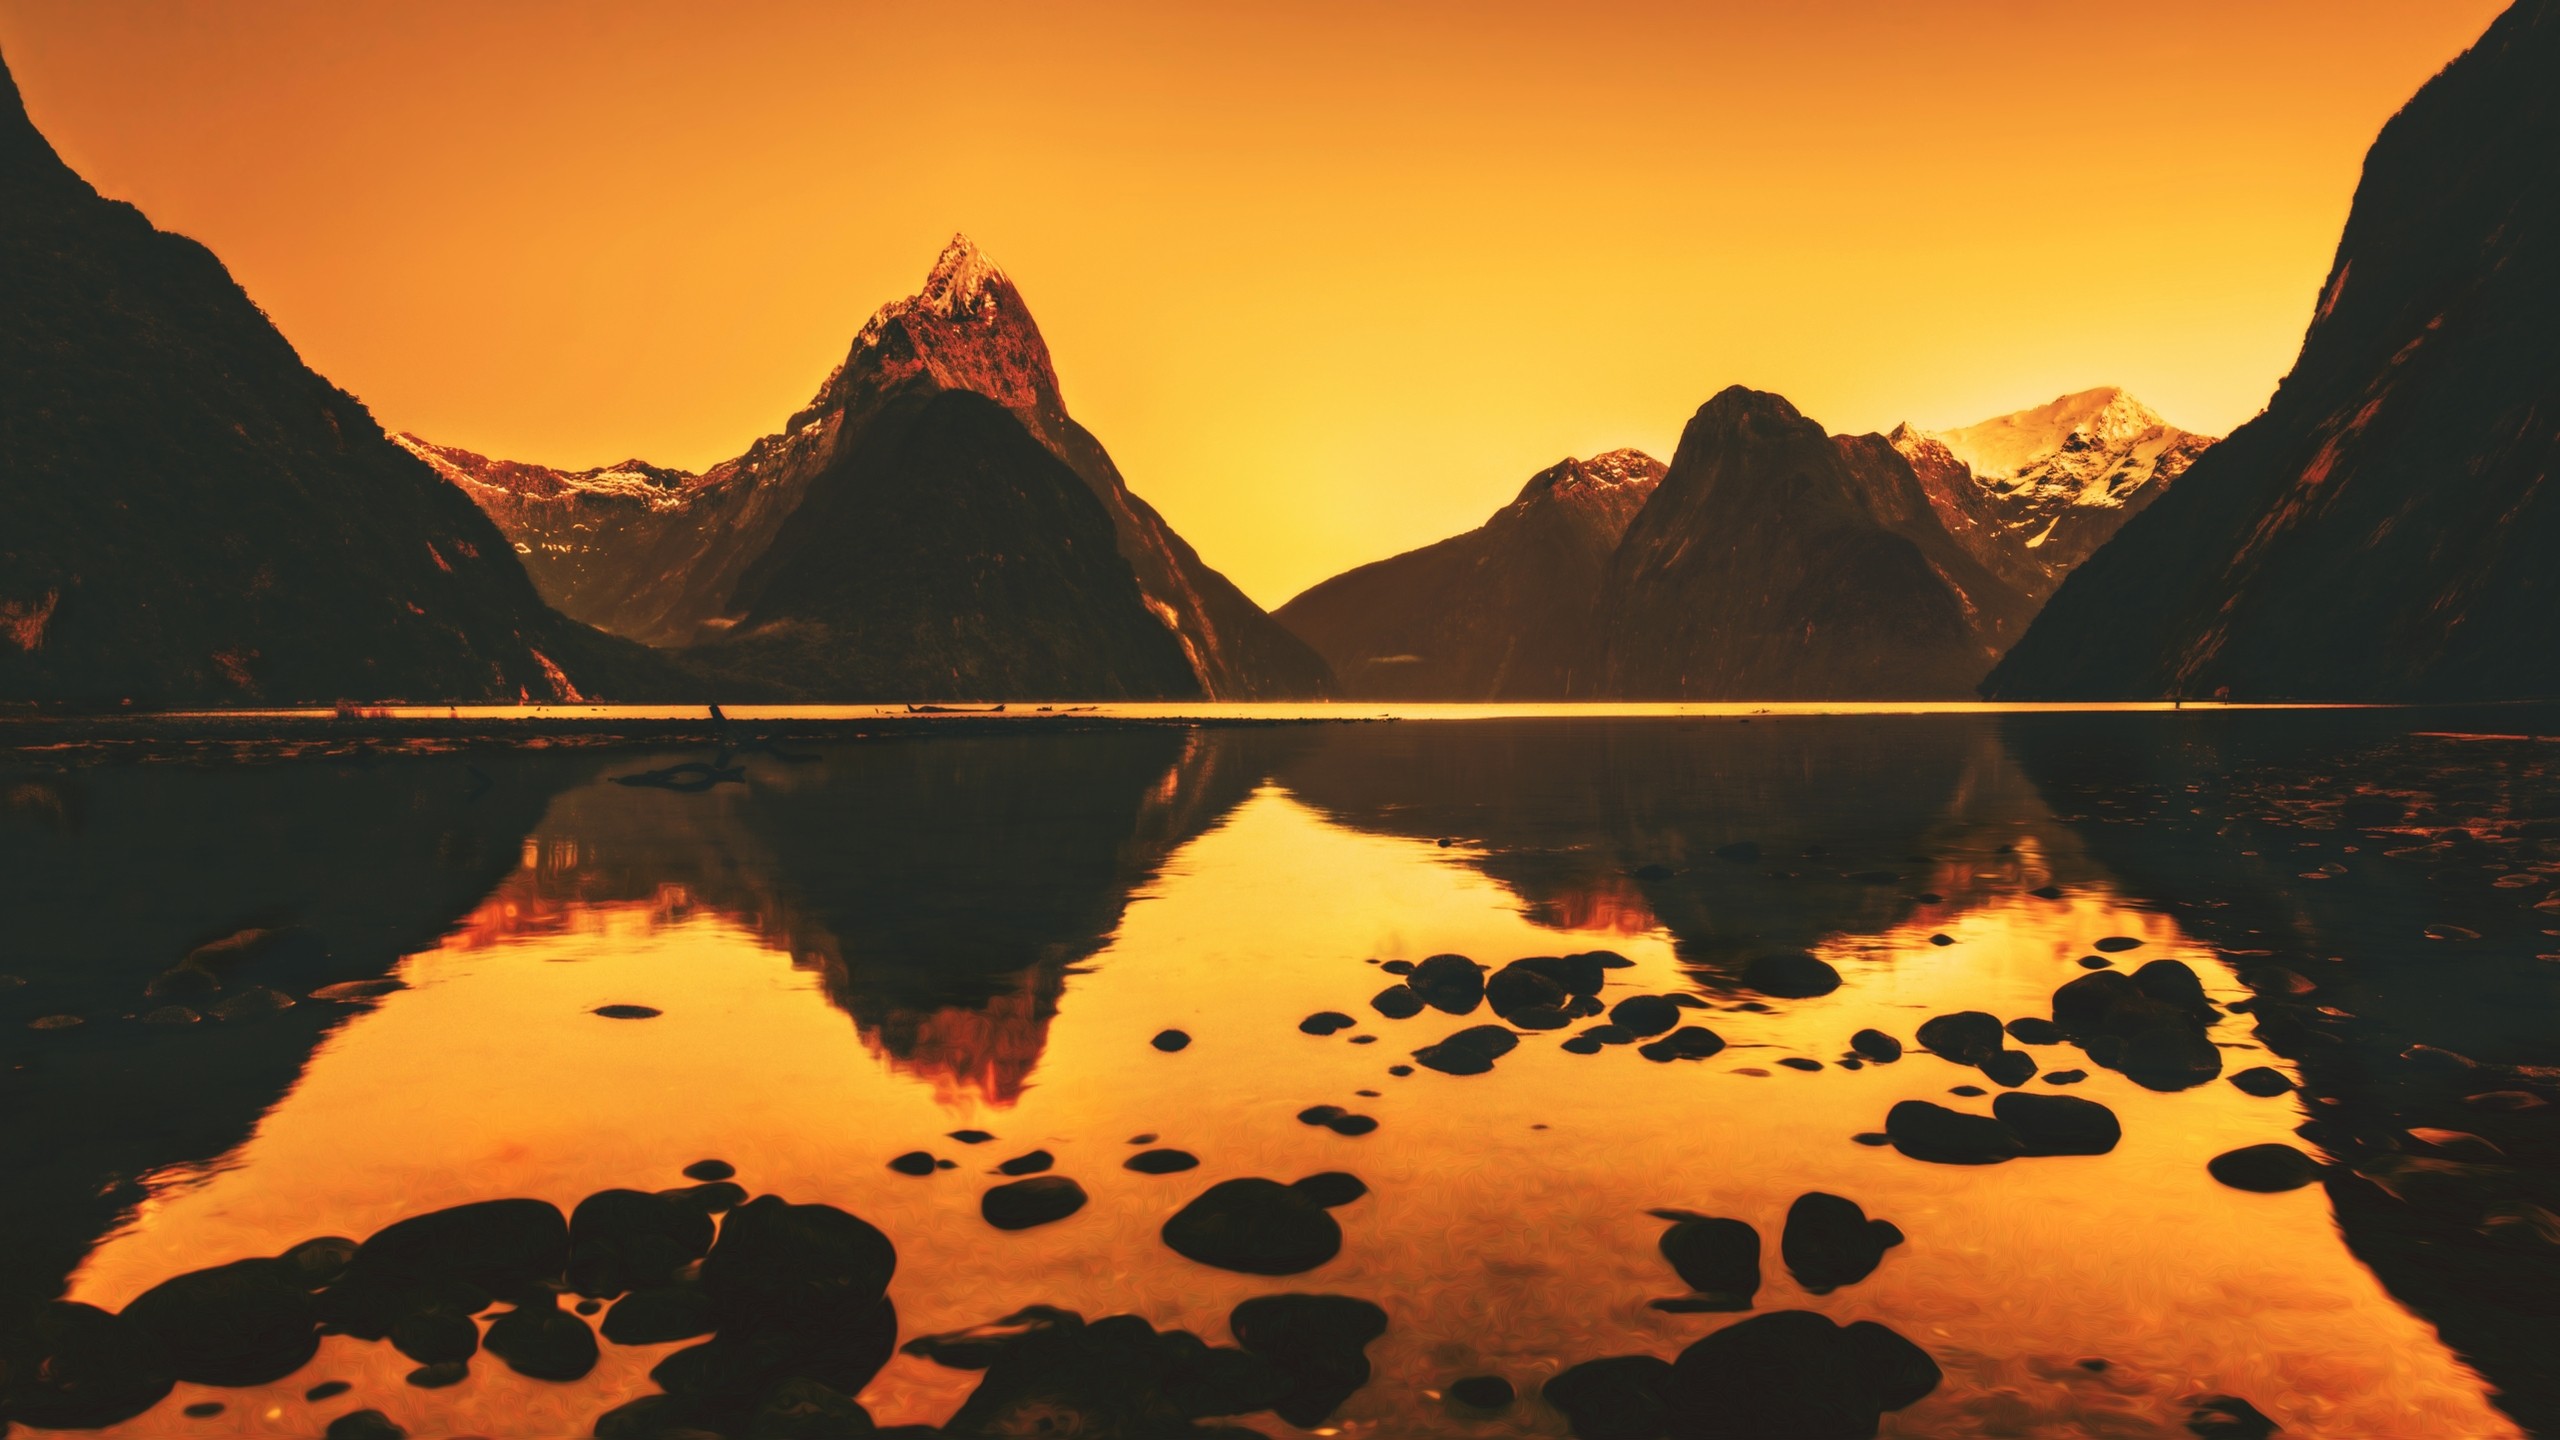 General 2560x1440 photography nature landscape orange reflection lake mountains hills rocks calm New Zealand Milford Sound